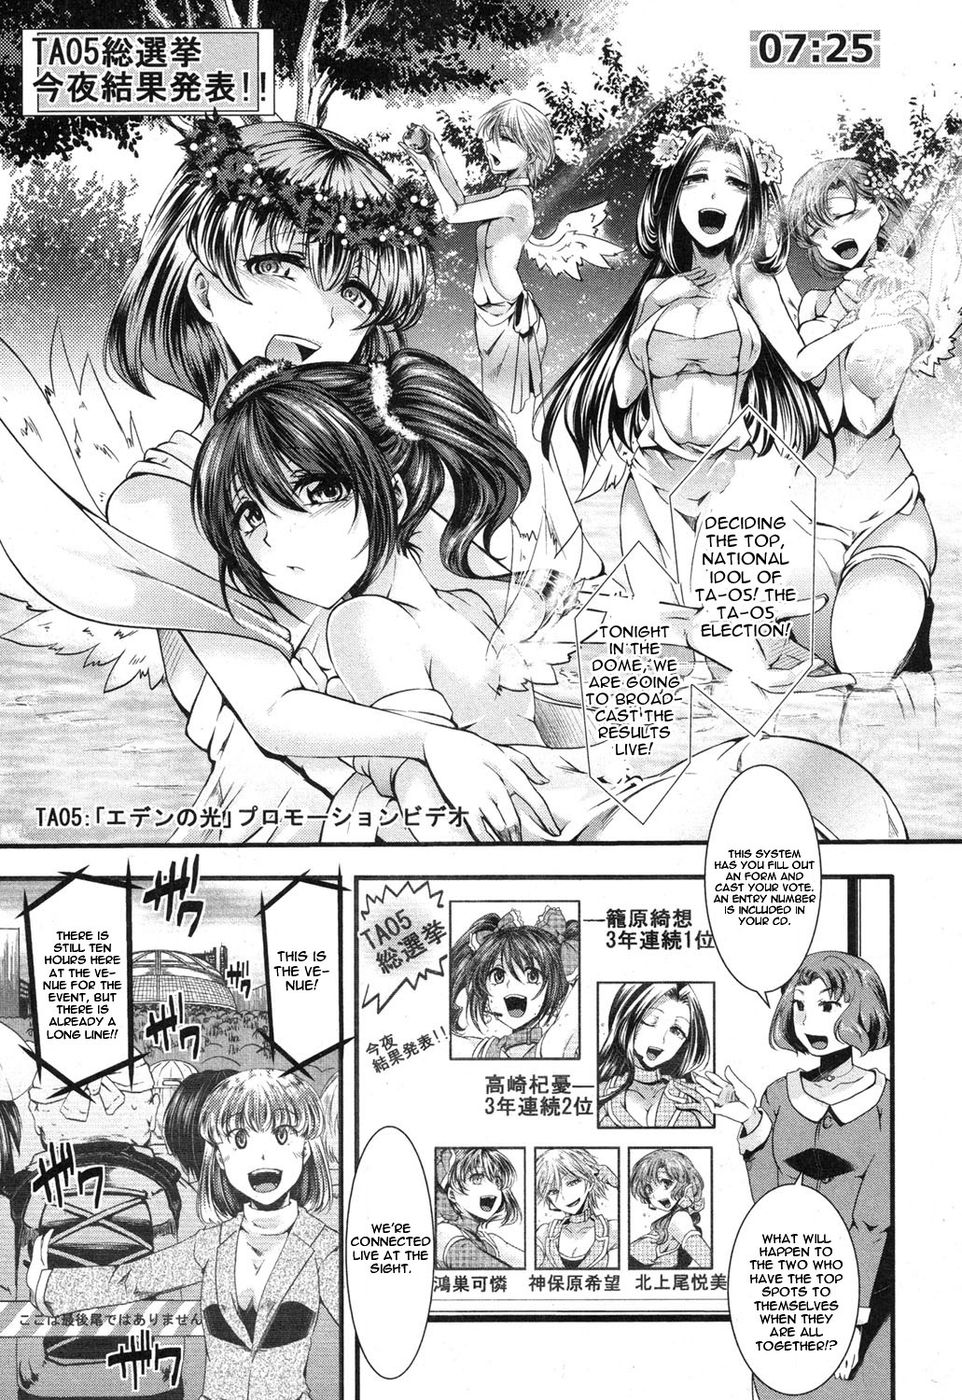 Hentai Manga Comic-Idol Decay (Wickedness)-Read-1